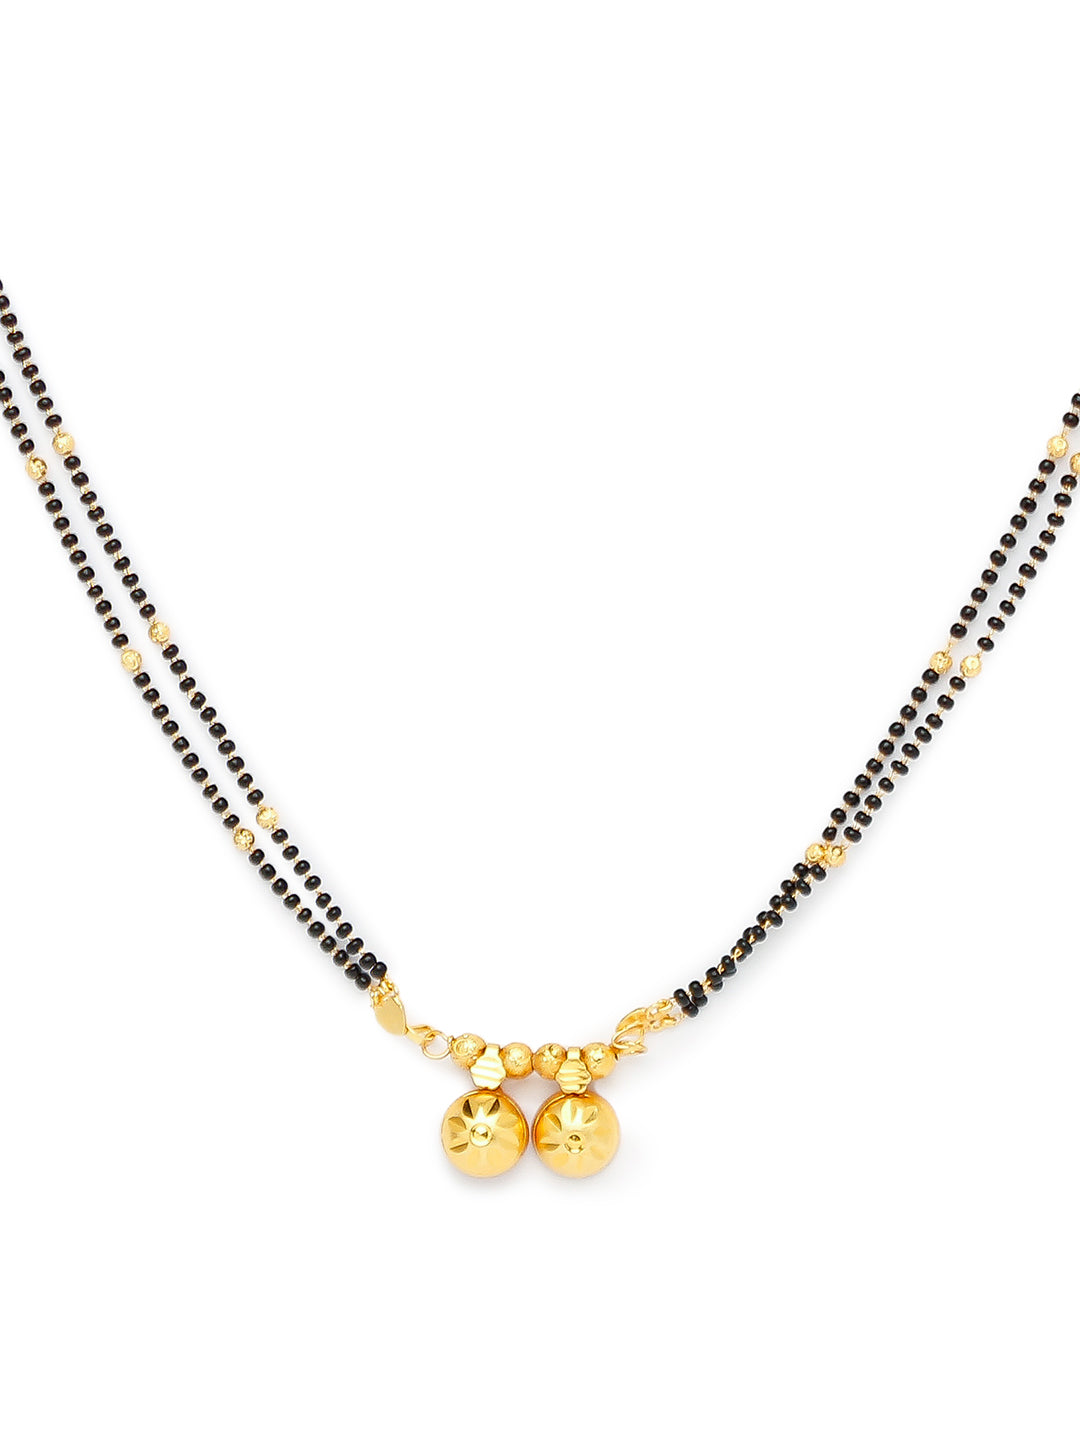 Latest Gold/Diamond Mangalsutra Designs |Best Price ...